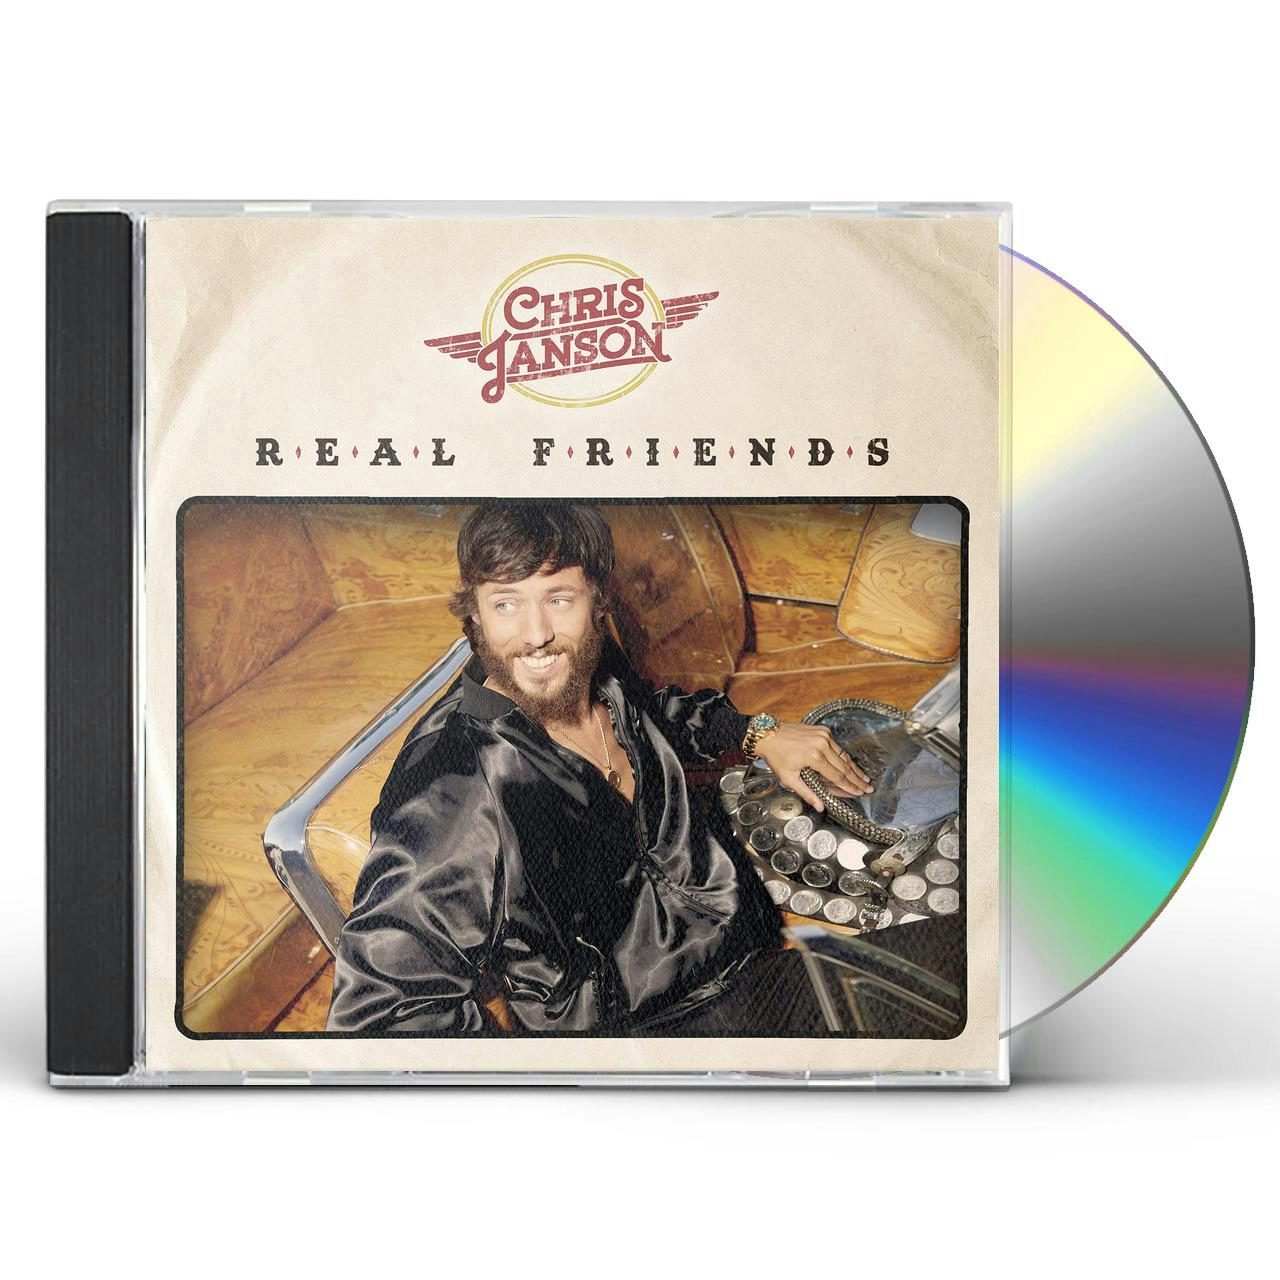 Real Friends Vinyl Record - Chris Janson